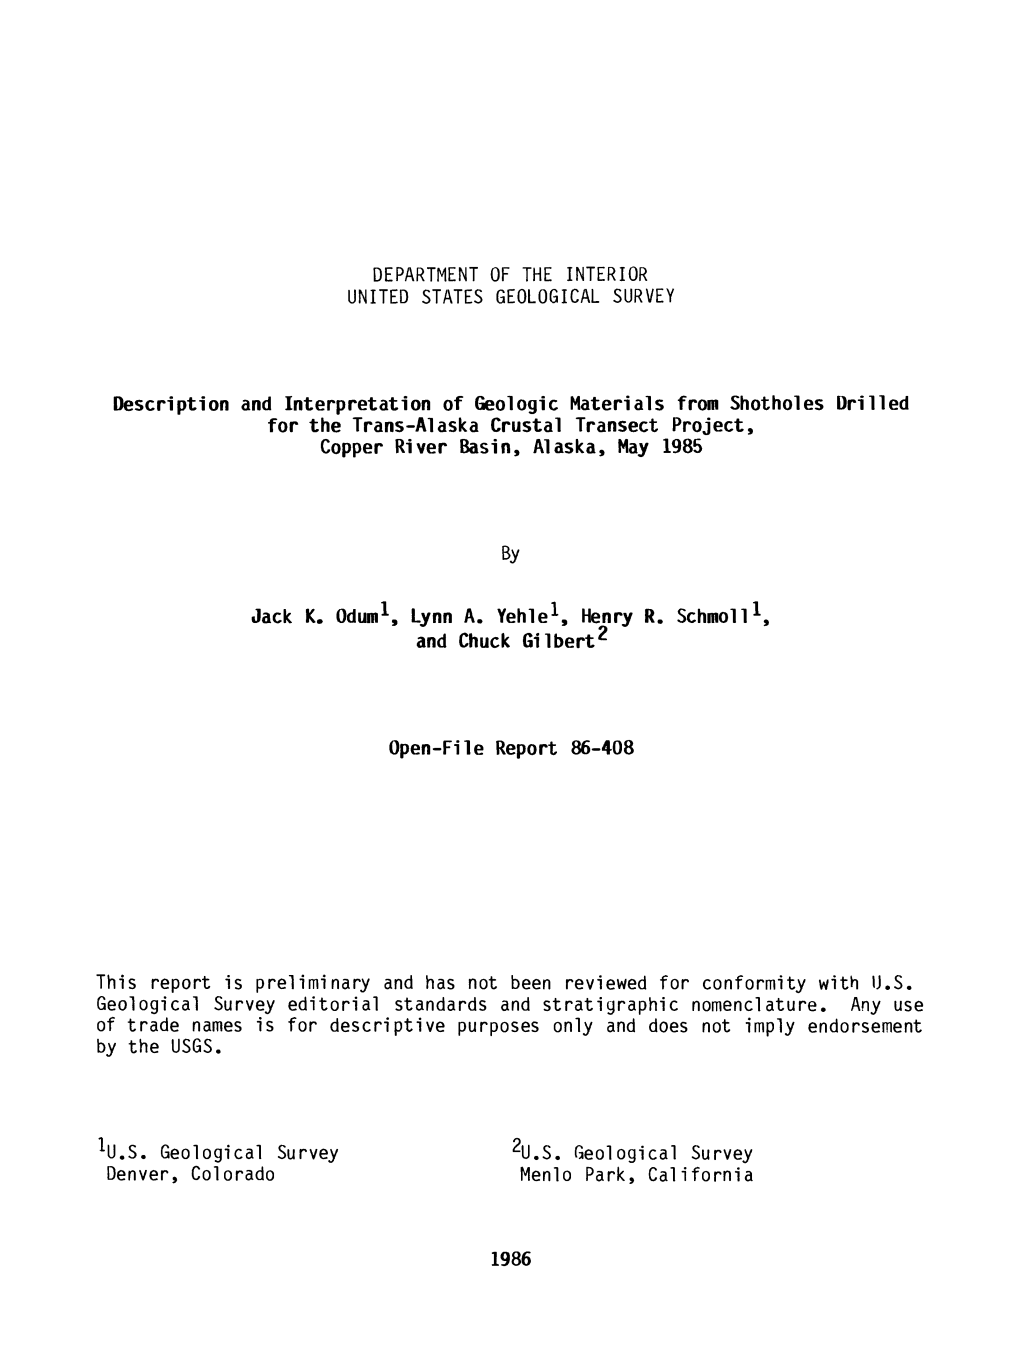 Description and Interpretation of Geologic Materials from Shotholes Drilled for the Trans-Alaska Crustal Transect Project, Copper River Basin, Alaska, May 1985